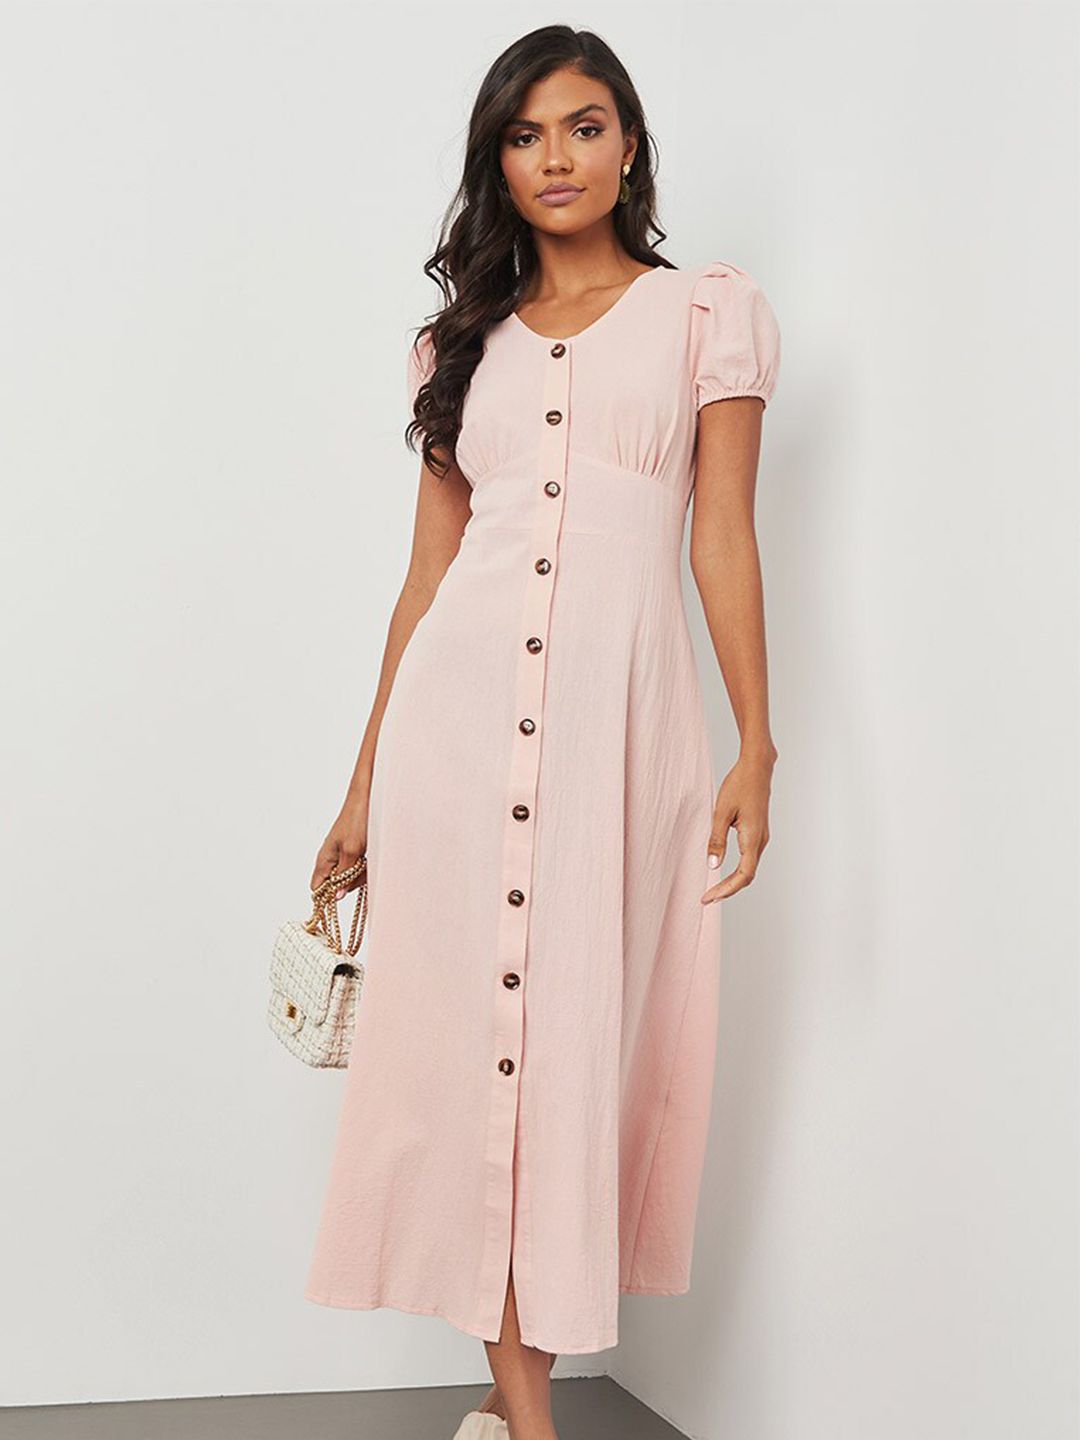 Styli Pink Maxi Dress Price in India